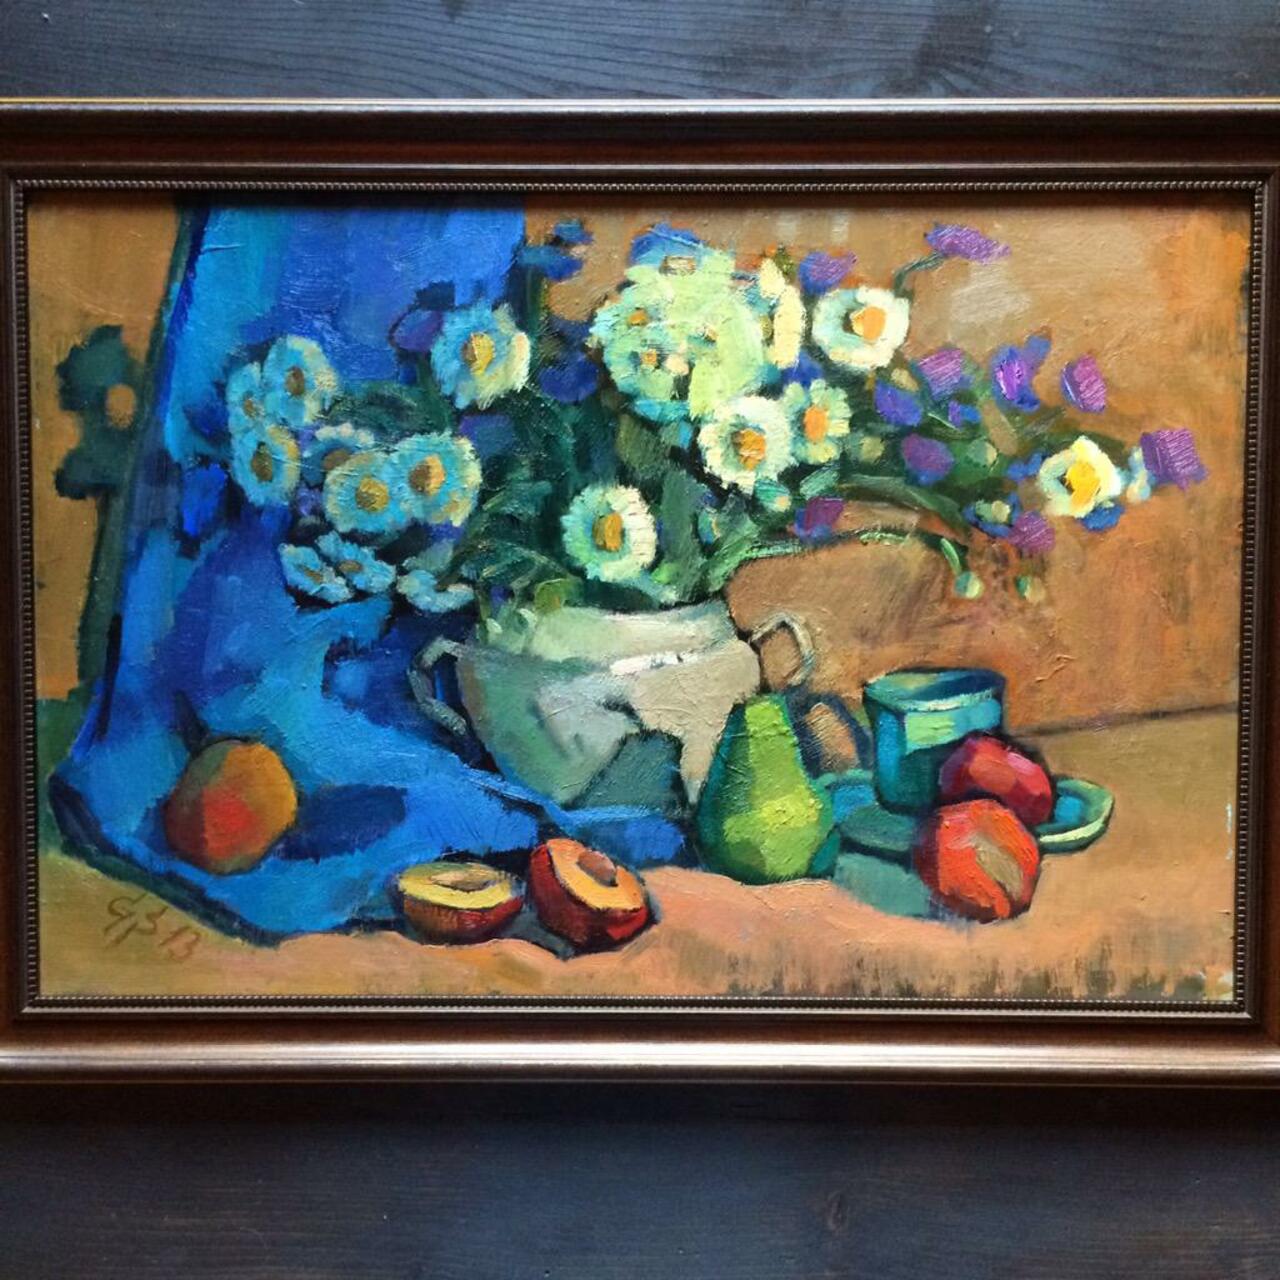 #art #painting #fruits #oil #fineart #StillLife #framed #daisies #COLORFUL #original #flowers #artwork #artist http://t.co/sTTkFtUtcN